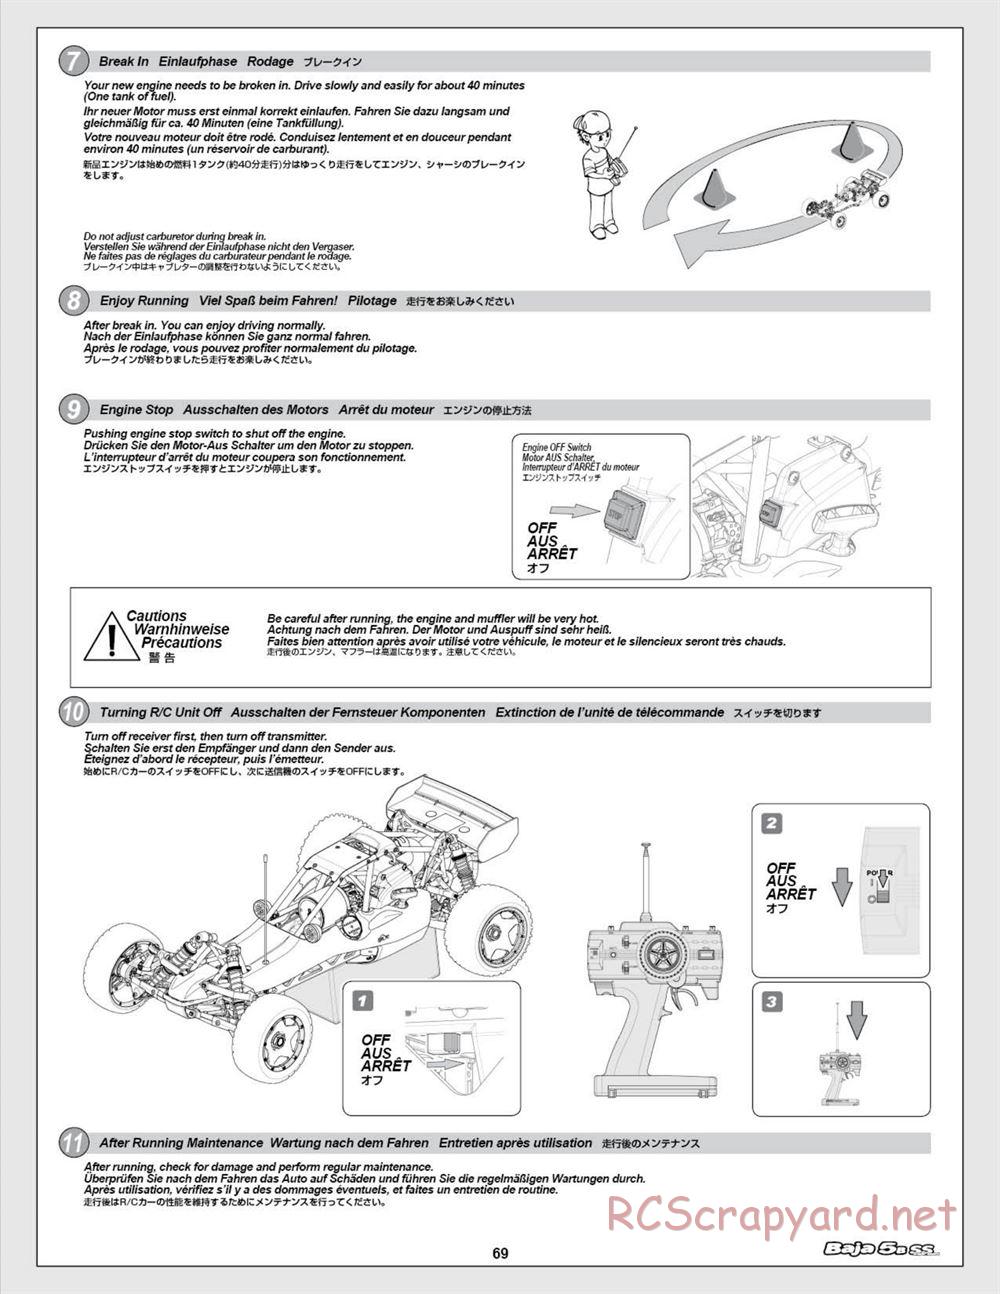 HPI - Baja 5b SS - Manual - Page 69